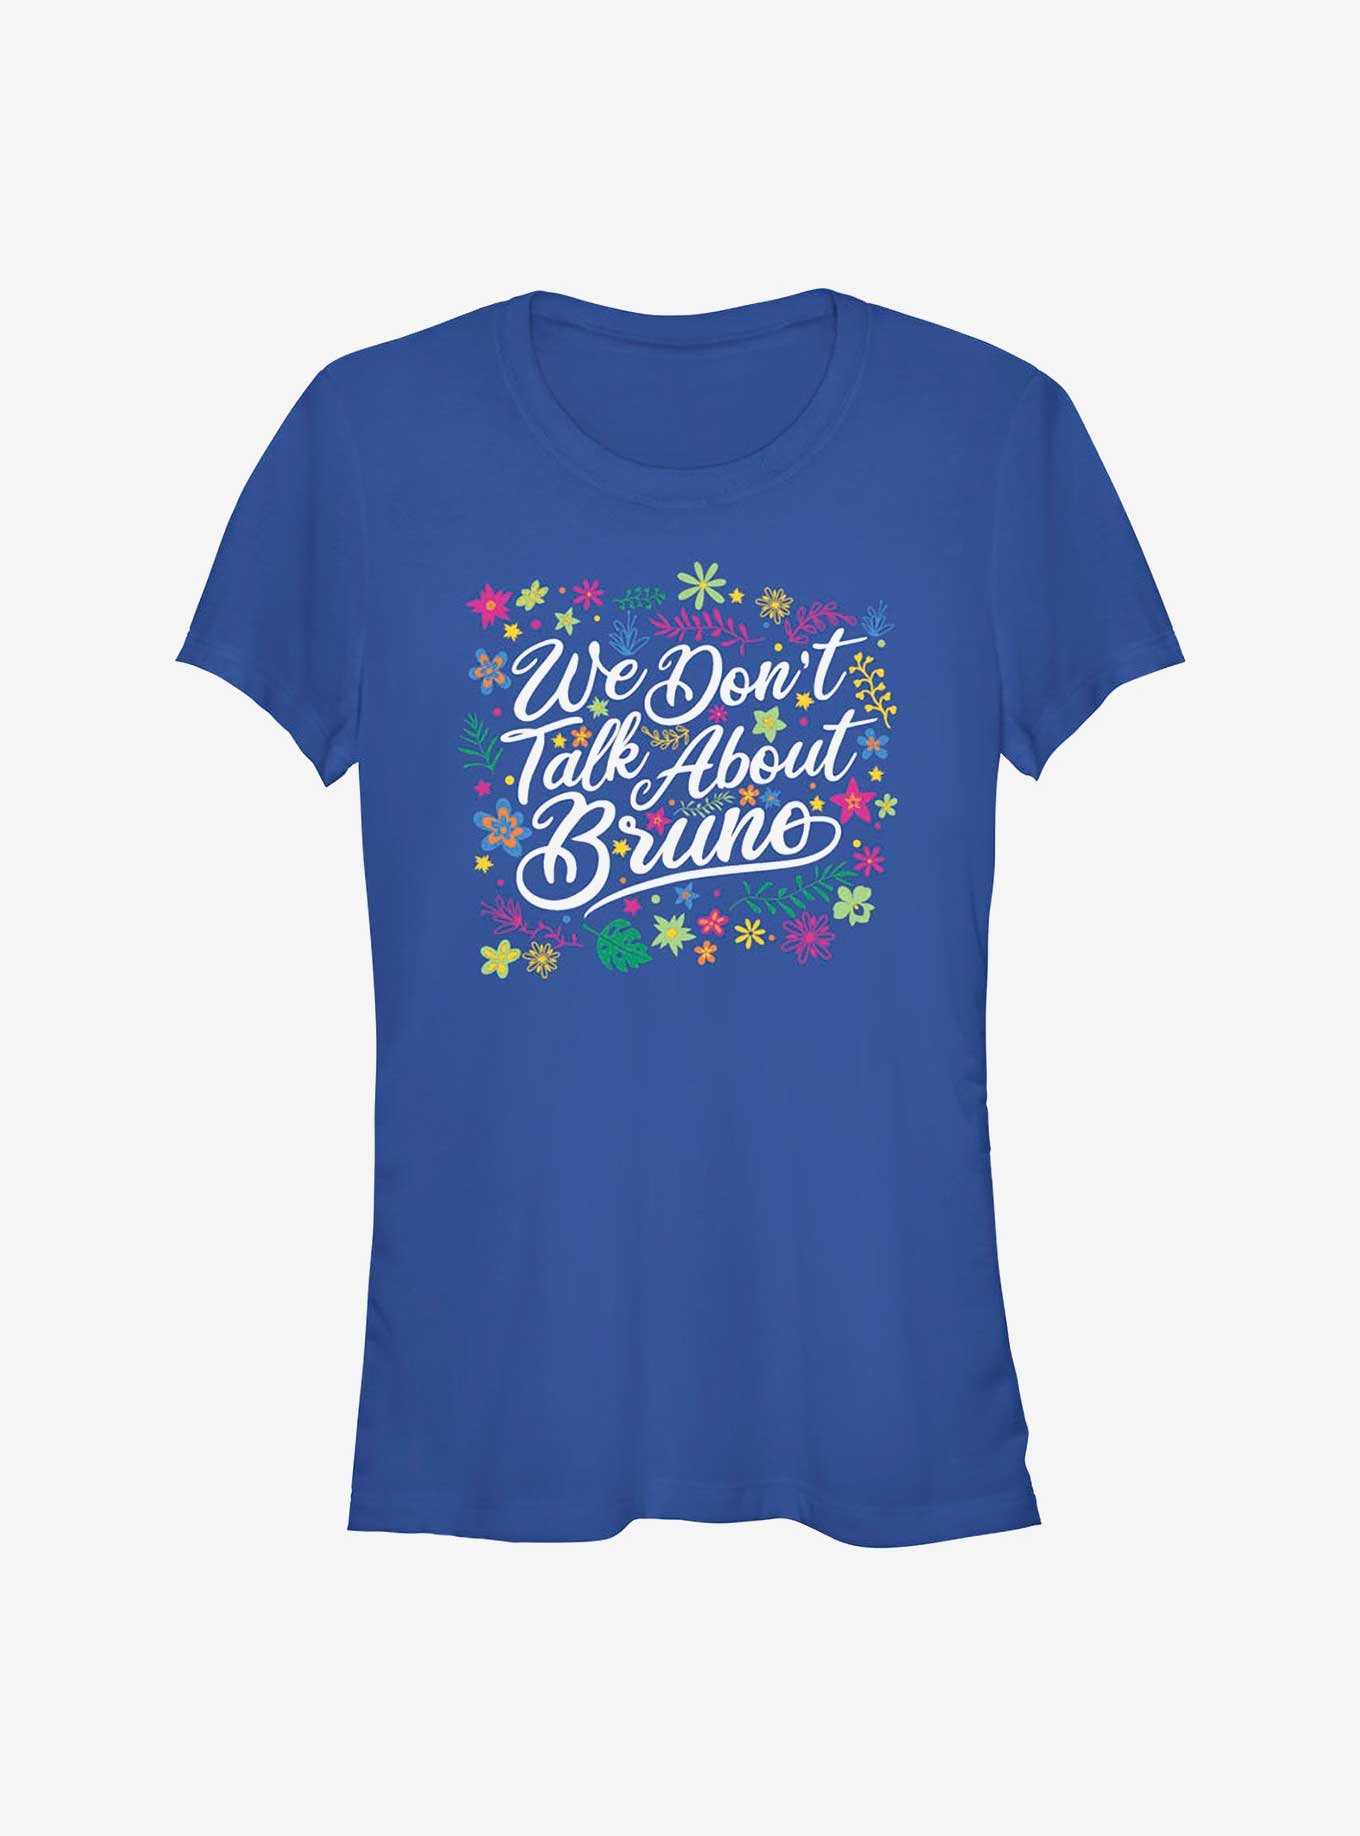 Disney's Encanto About Bruno Colorful Girl's T-Shirt, , hi-res